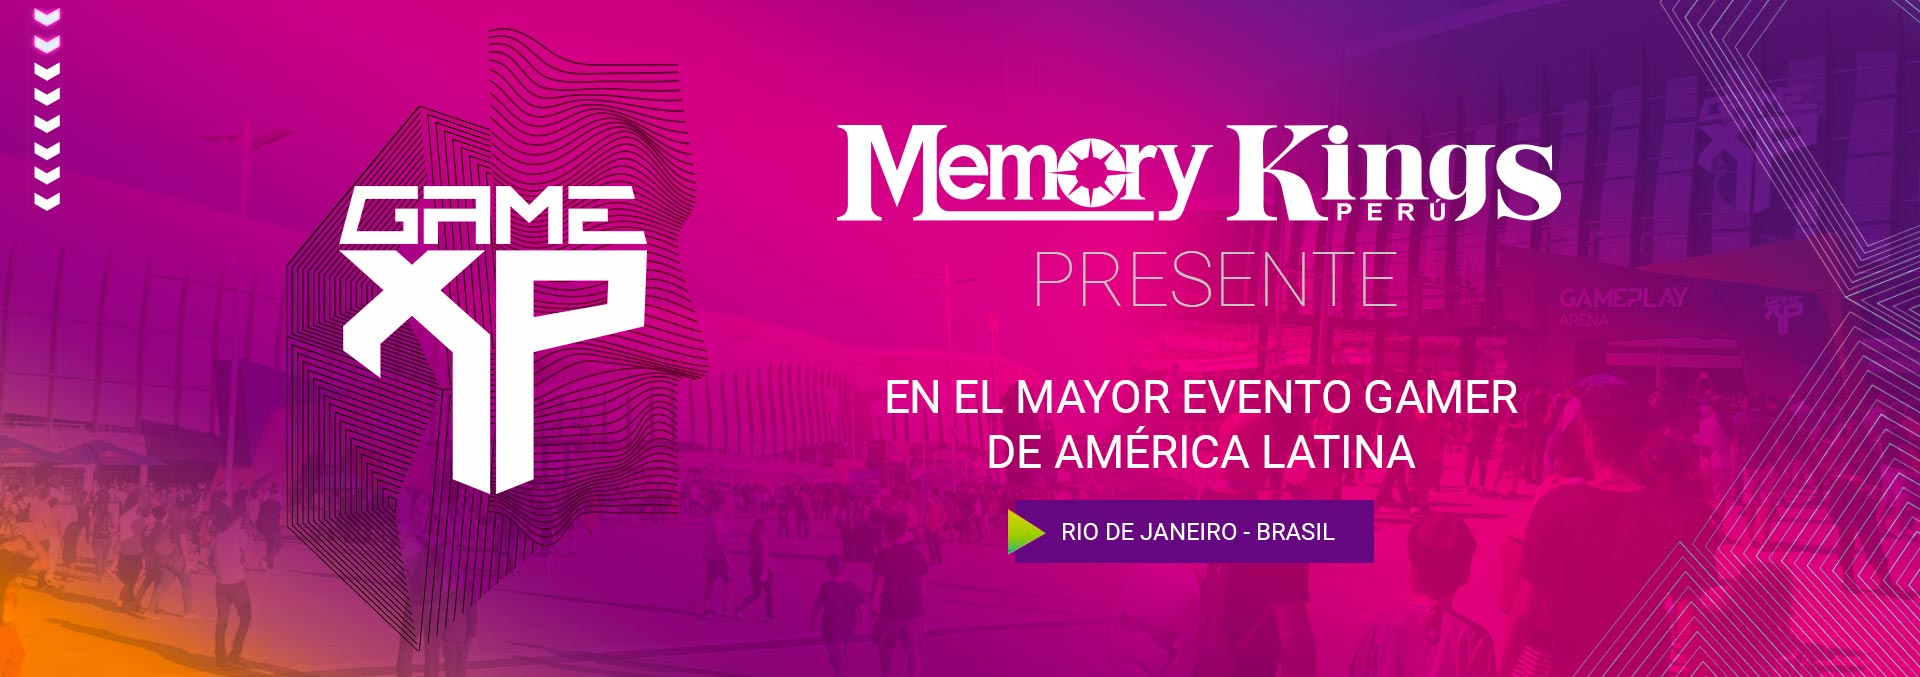 TERCER ESPECIAL - MEMORY KINGS EN EL EVENTO GAMER MAS GRANDE DEL MUNDO GAME XP - RIO DE JANEIRO BRASIL